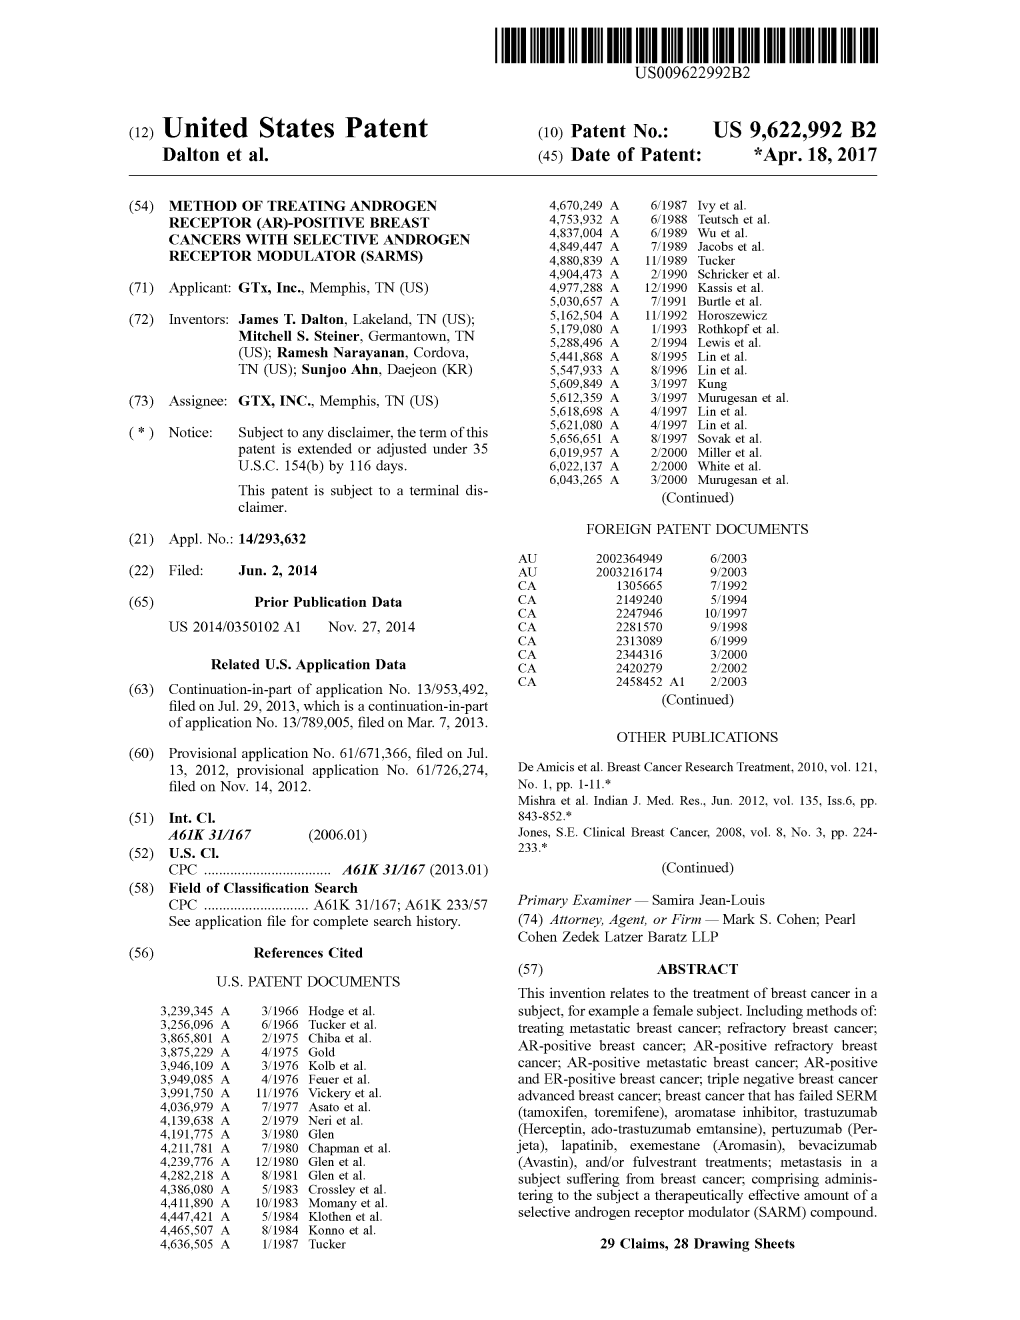 (12) United States Patent (10) Patent No.: US 9,622,992 B2 Dalton Et Al